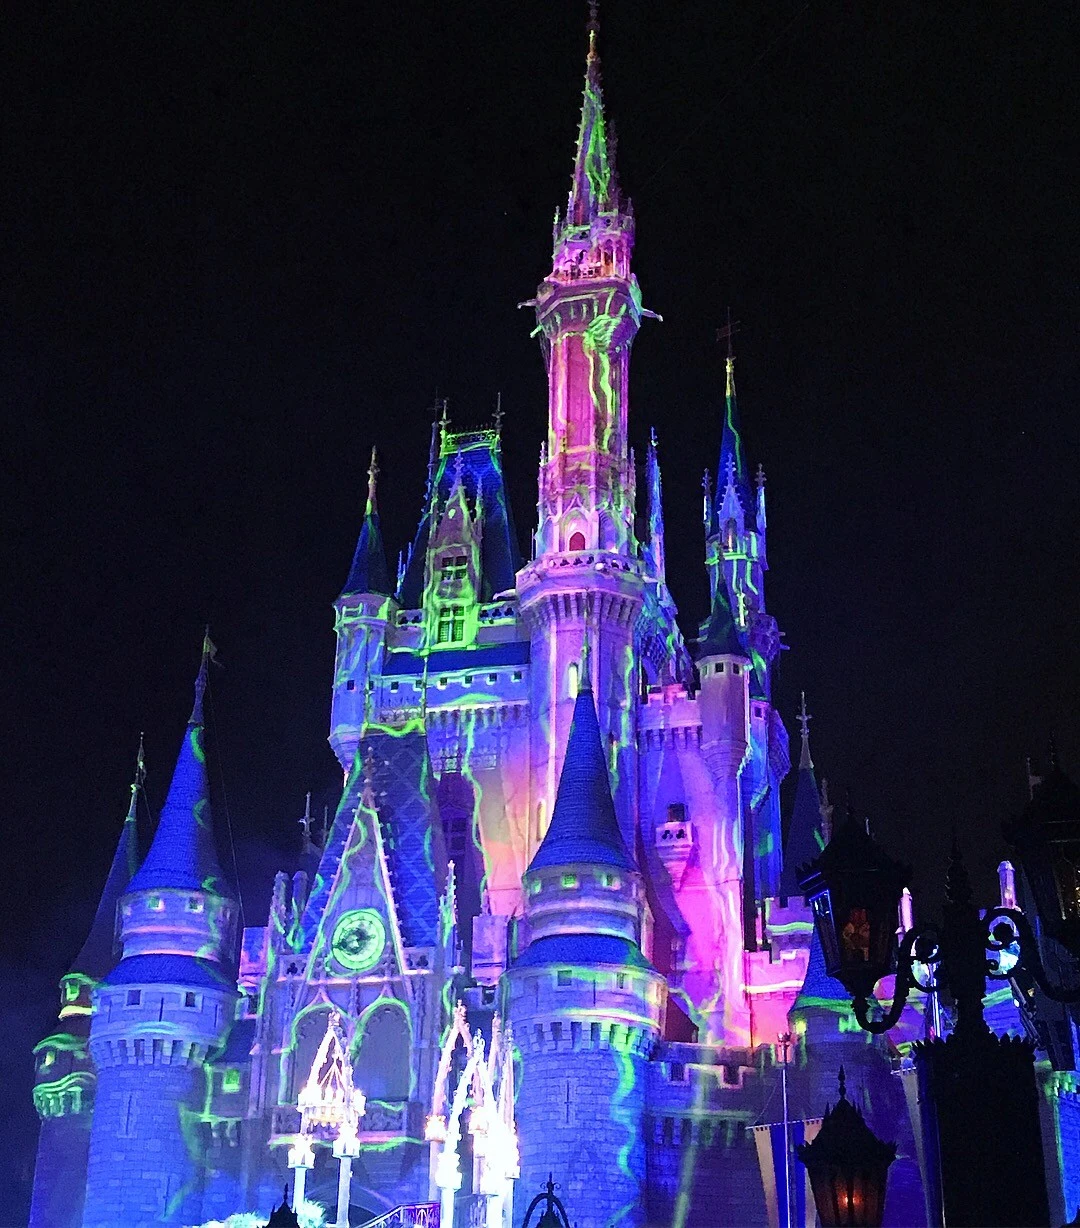 Cinderella's castle in magic kingdom lit up at night